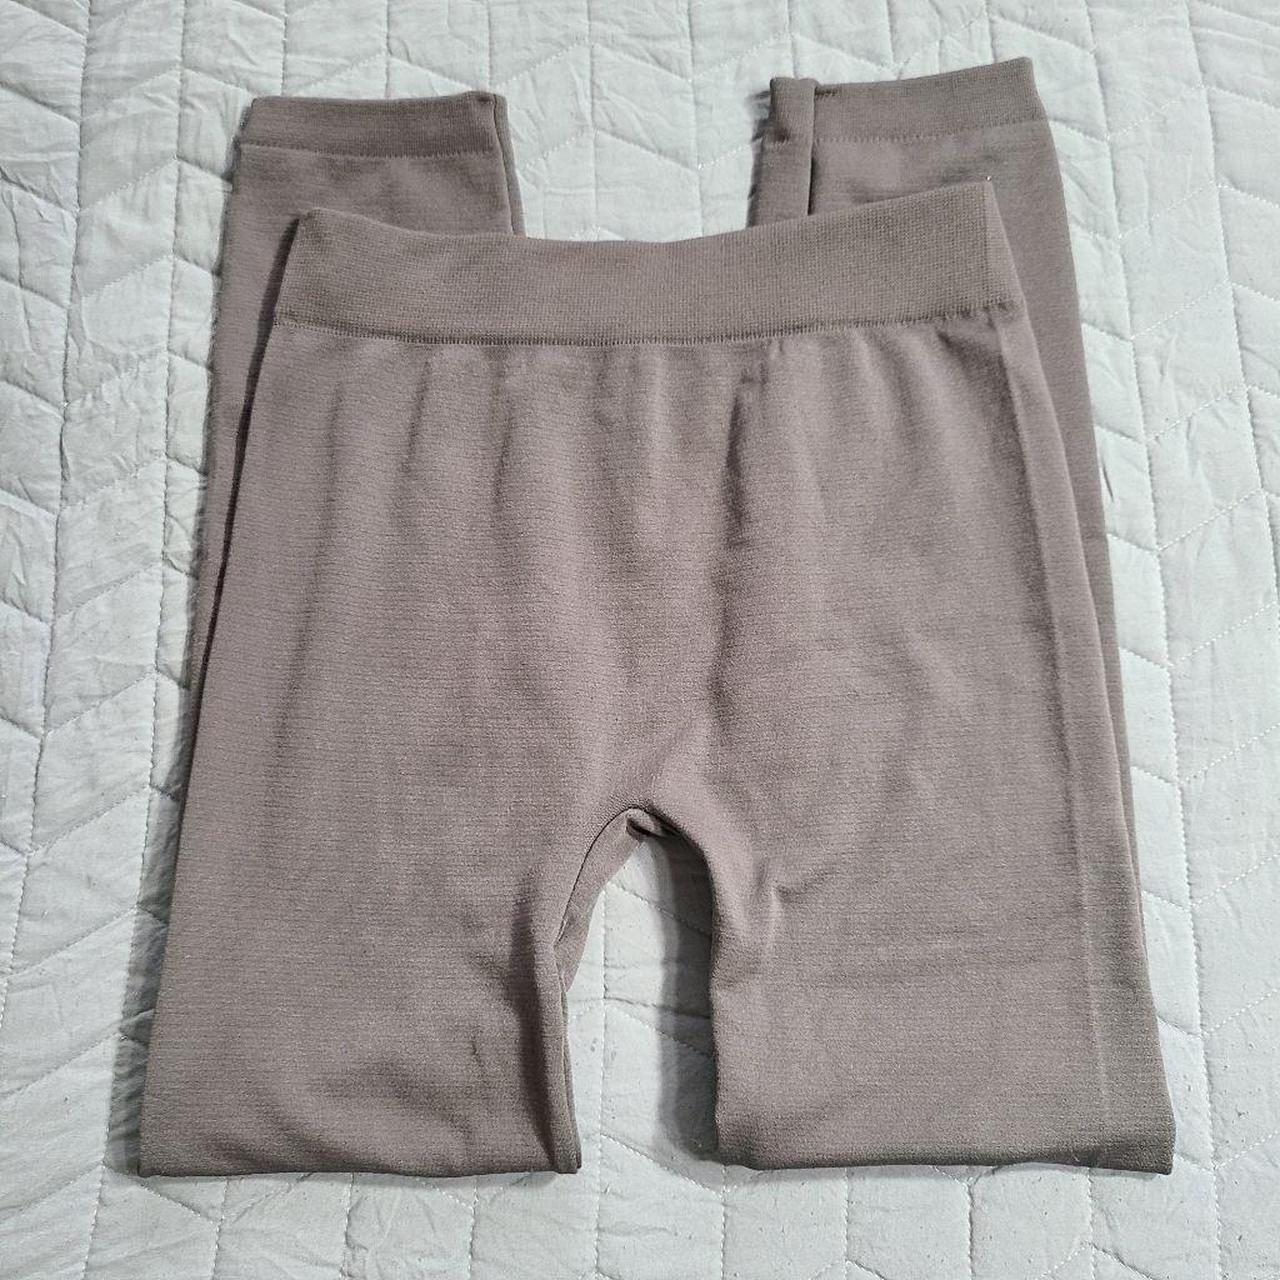 Product Image 1 - F&F charcoal gray leggings (worn